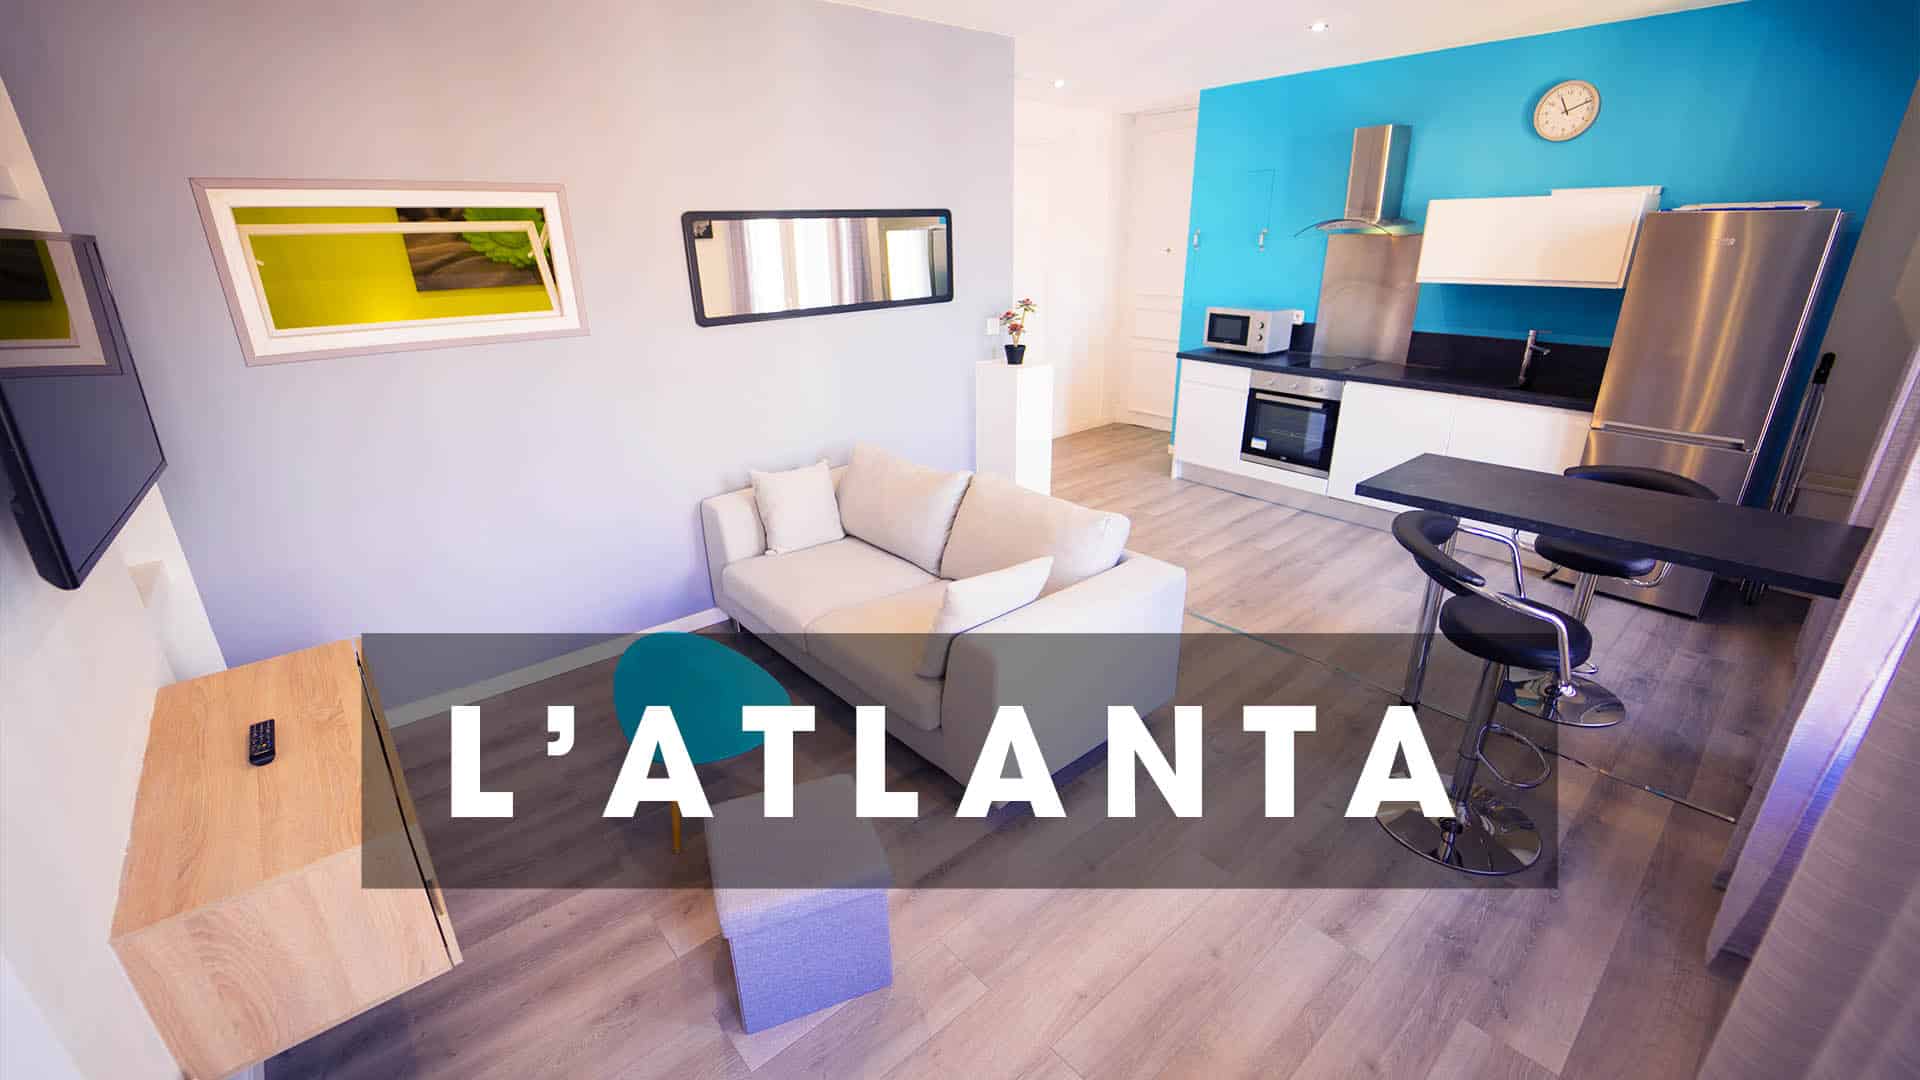 Turquoise location L'Atlanta L'atlanta